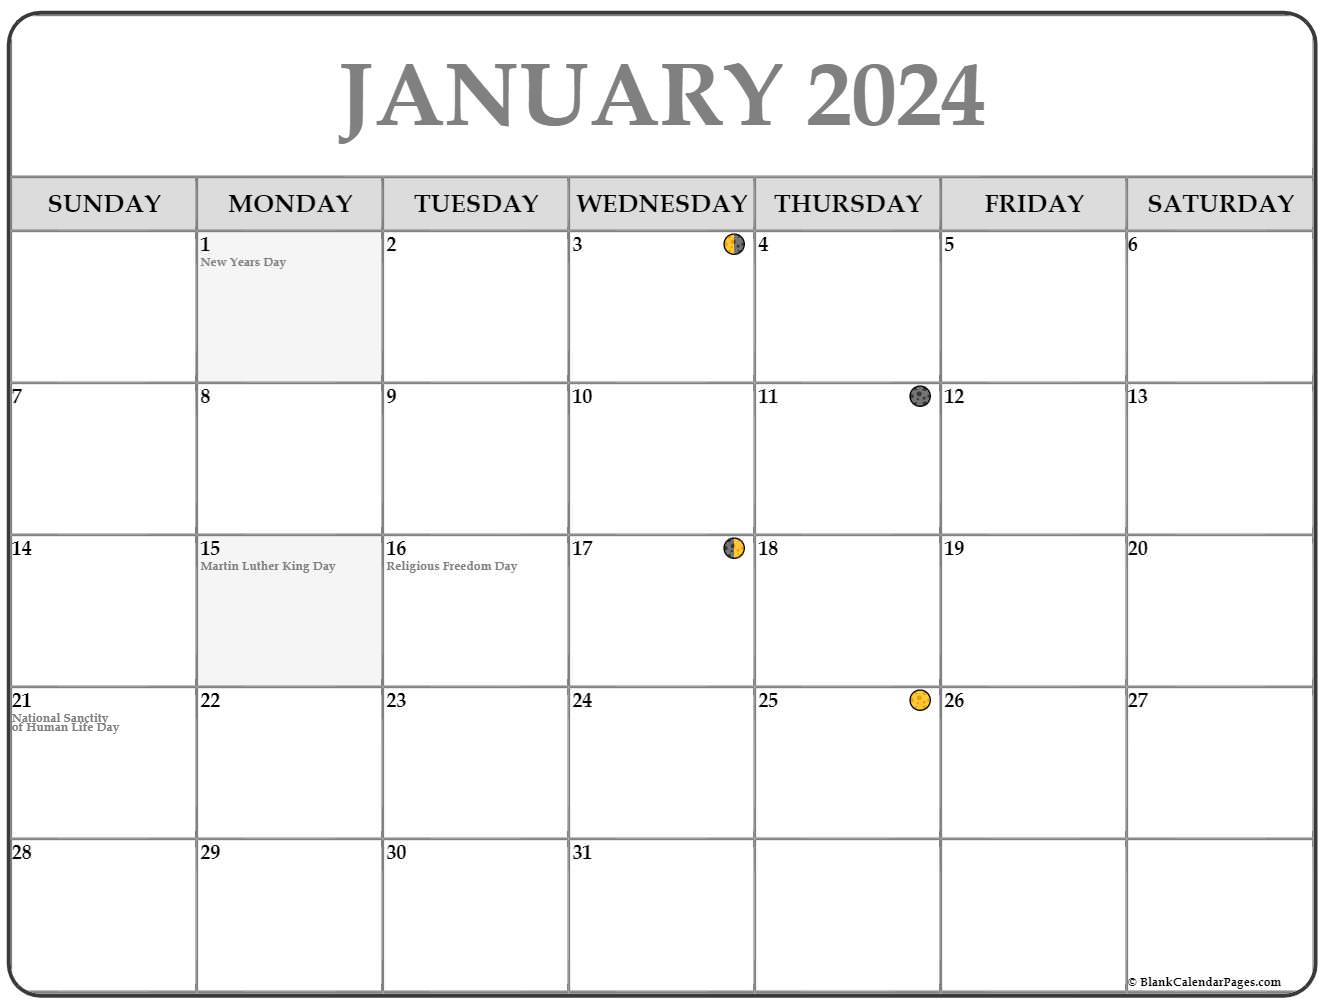 January 2020 calendar | 51+ calendar templates of 2020 calendars1767 x 1333